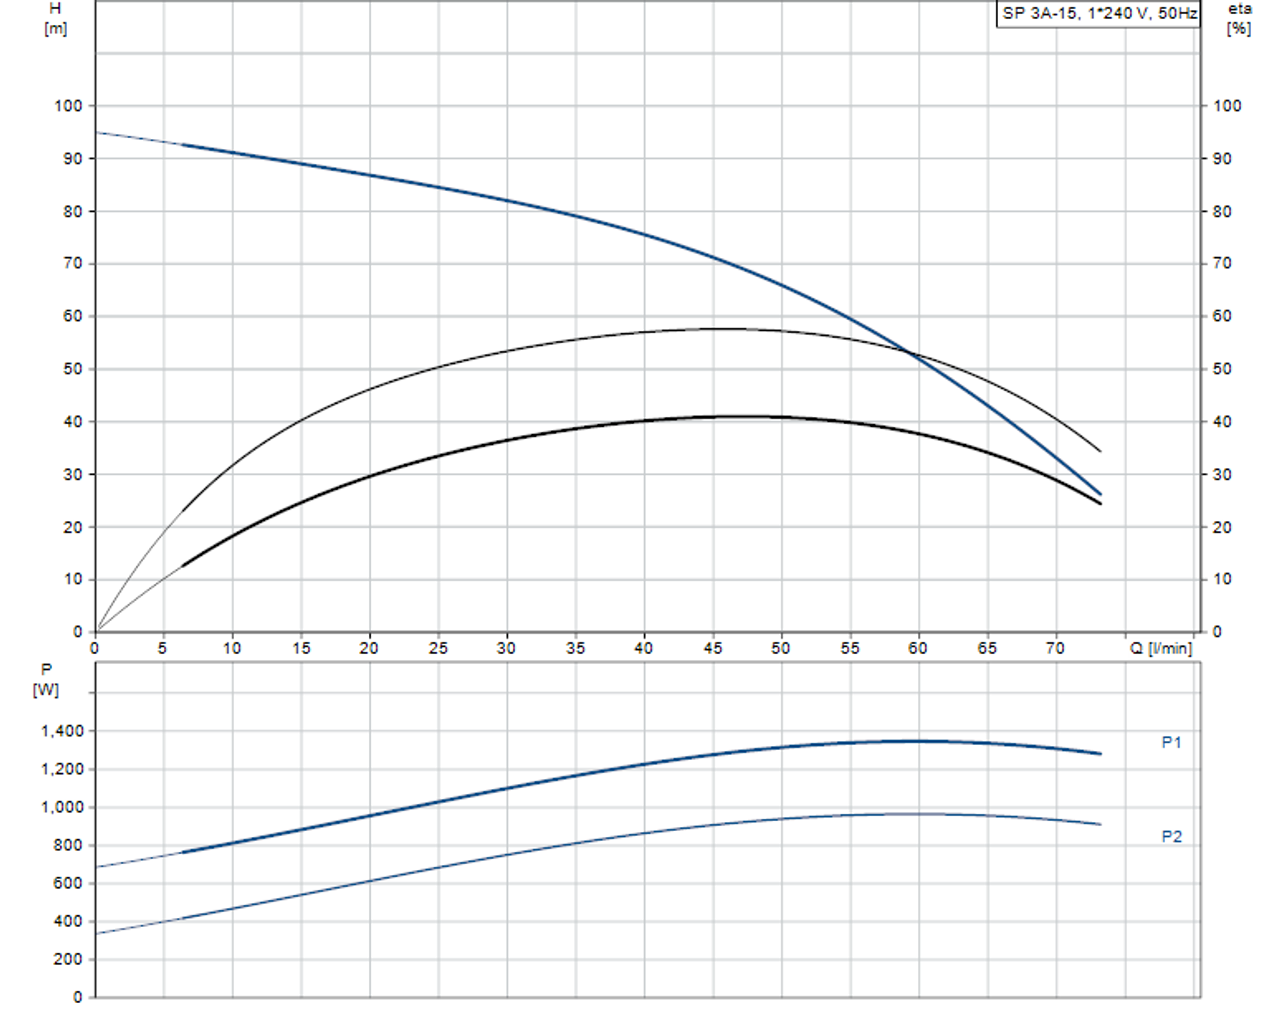 SP 3A-15 Performance Curve